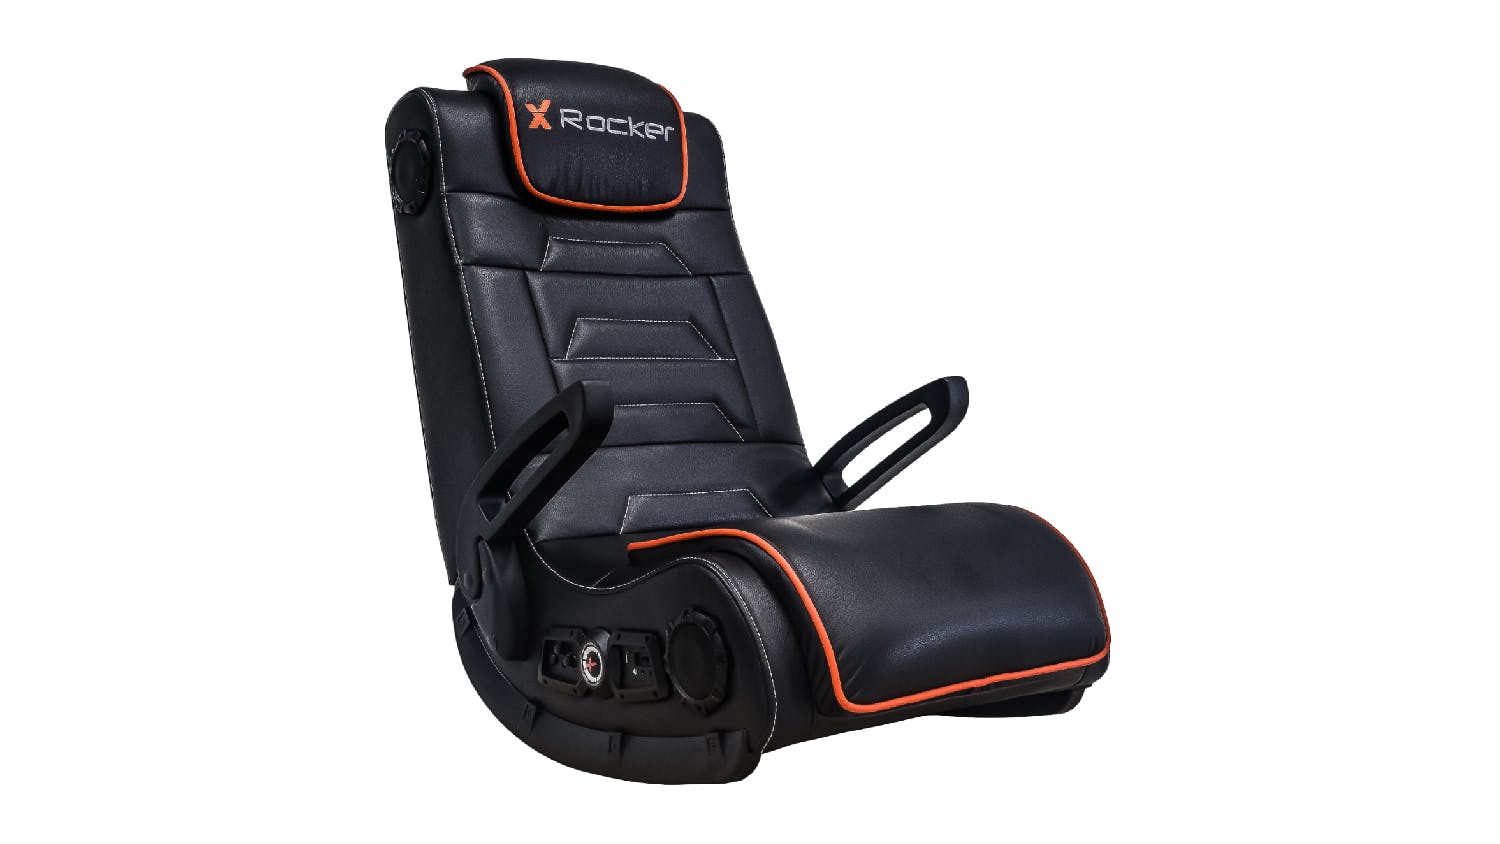 X Rocker 4.1 Wireless Audio Sentinel Gaming Rocker Chair with Haptics, Folding Arms